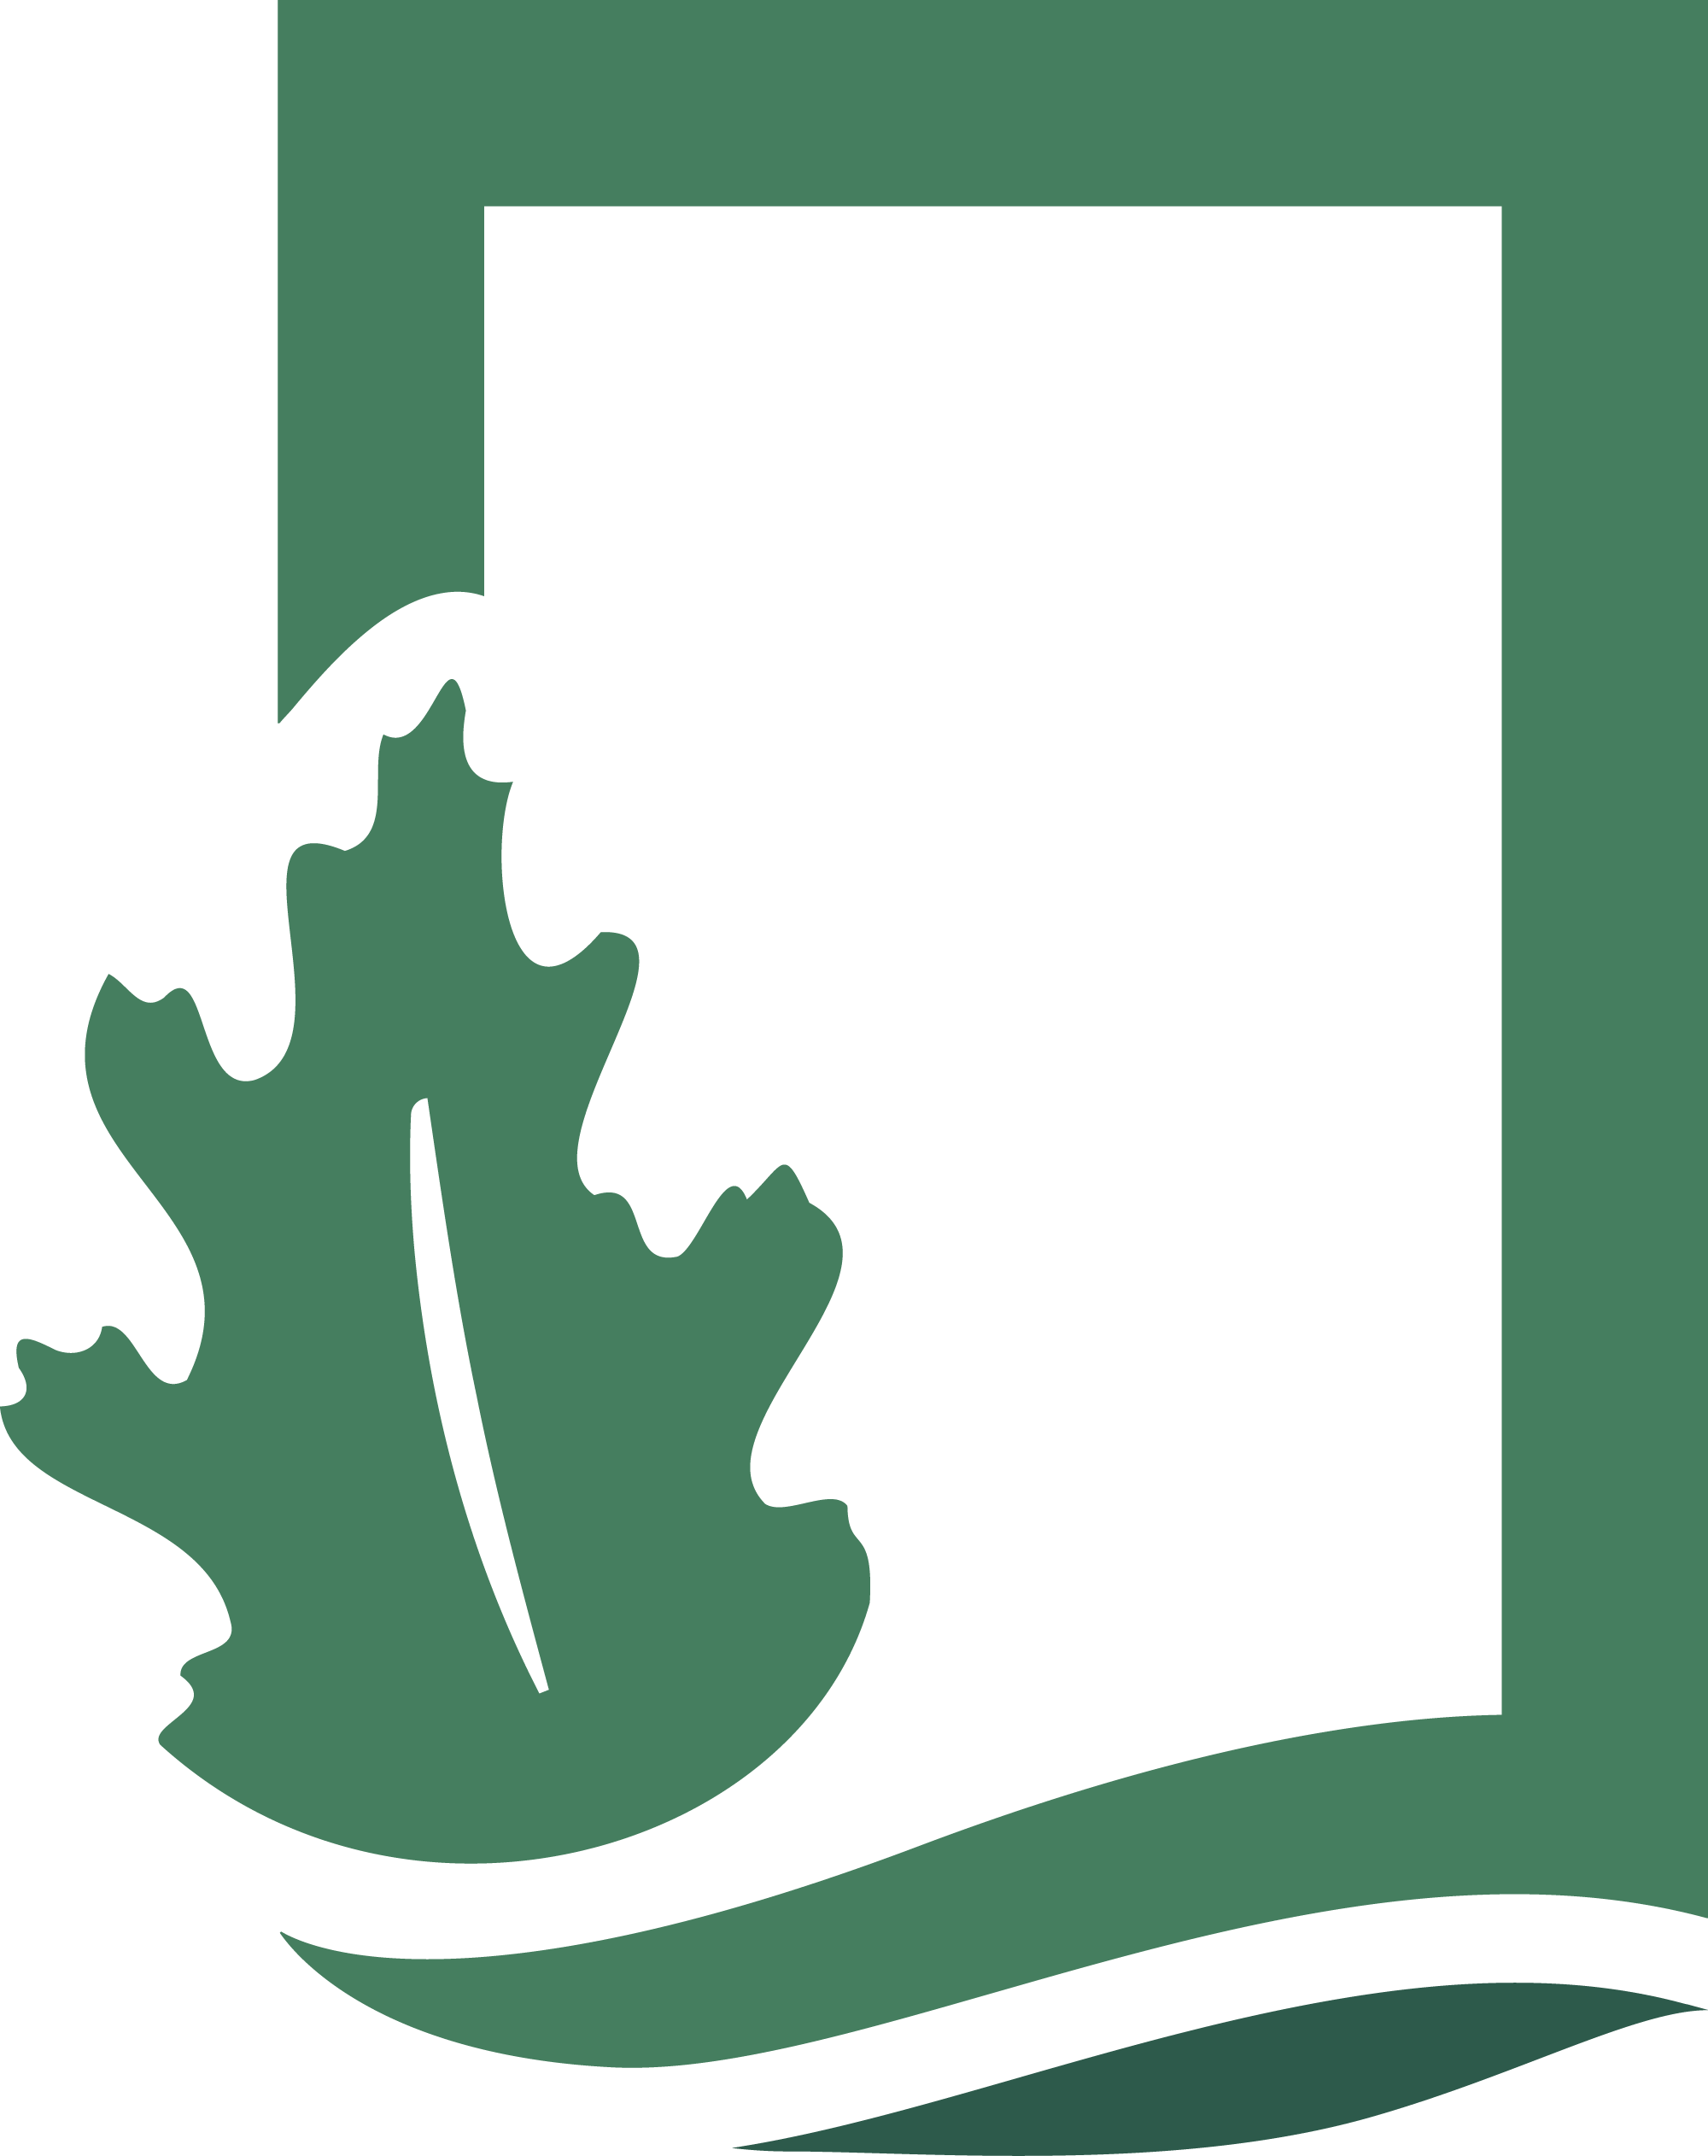 Kent County Parks Logo